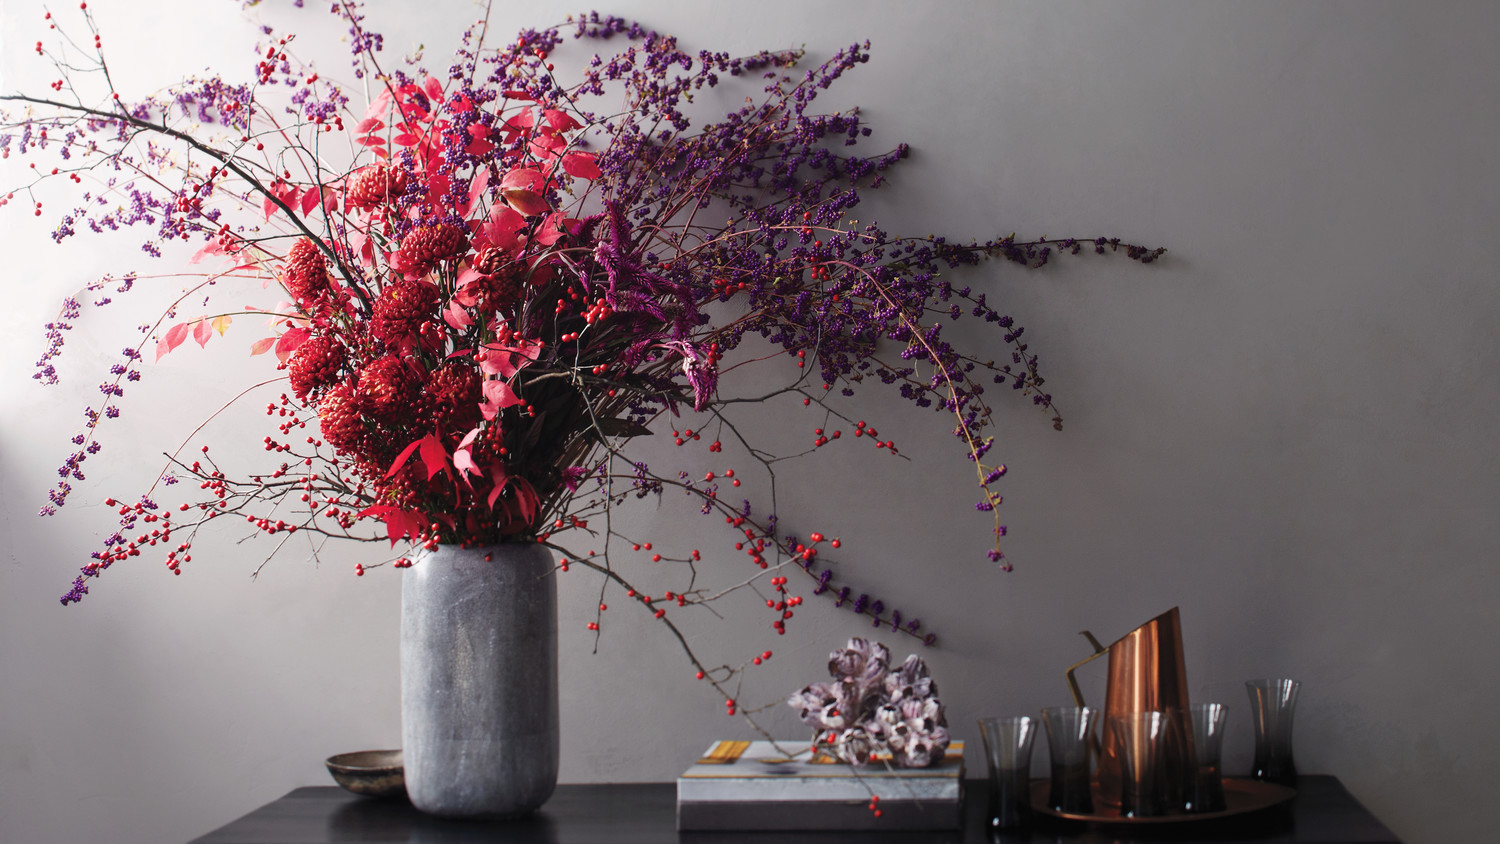 Fall Flower Arrangements | Martha Stewart